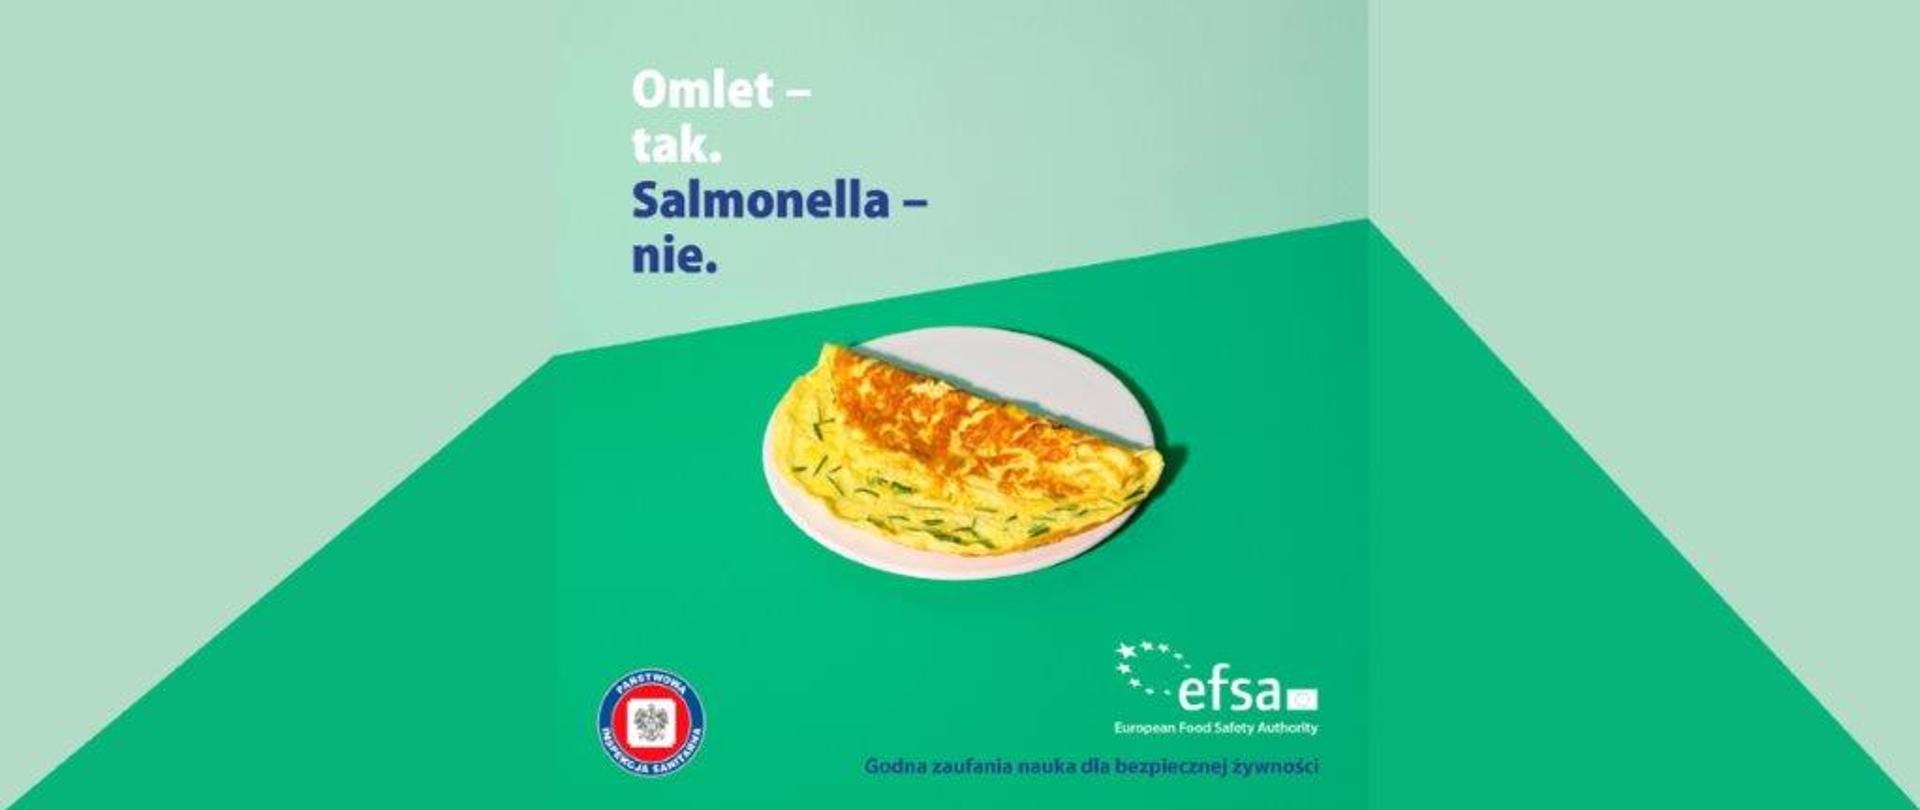 Omlet - tak. Salmonella - nie.